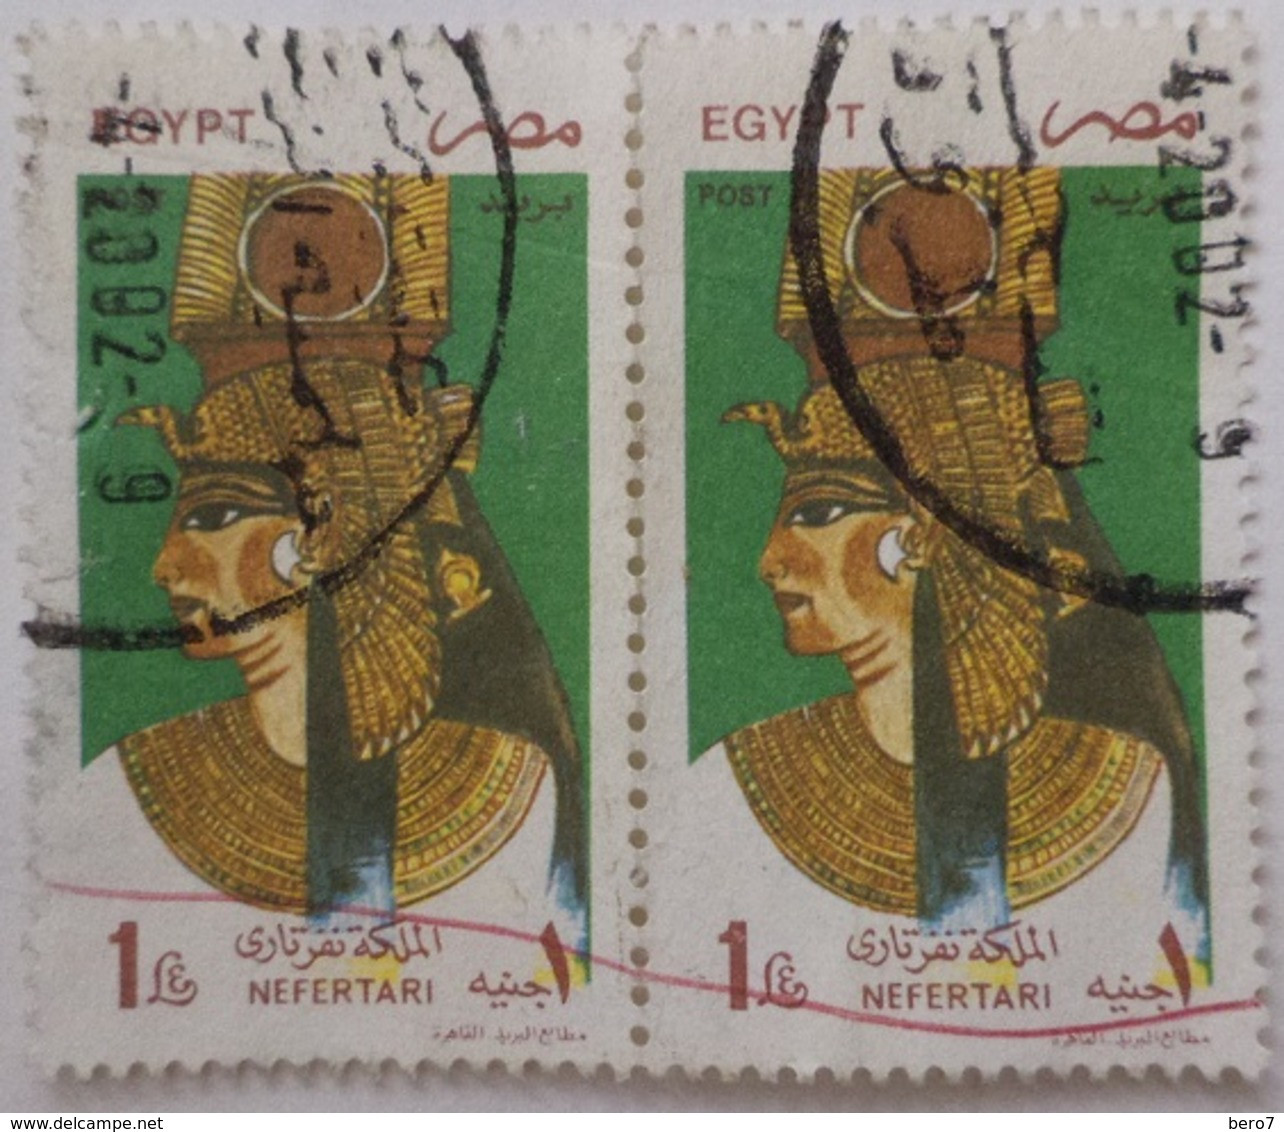 EGYPT - 1997- Queen Nefertai Wife Of Ramses II-  (Egypte) (Egitto) (Ägypten) (Egipto) (Egypten) - Used Stamps